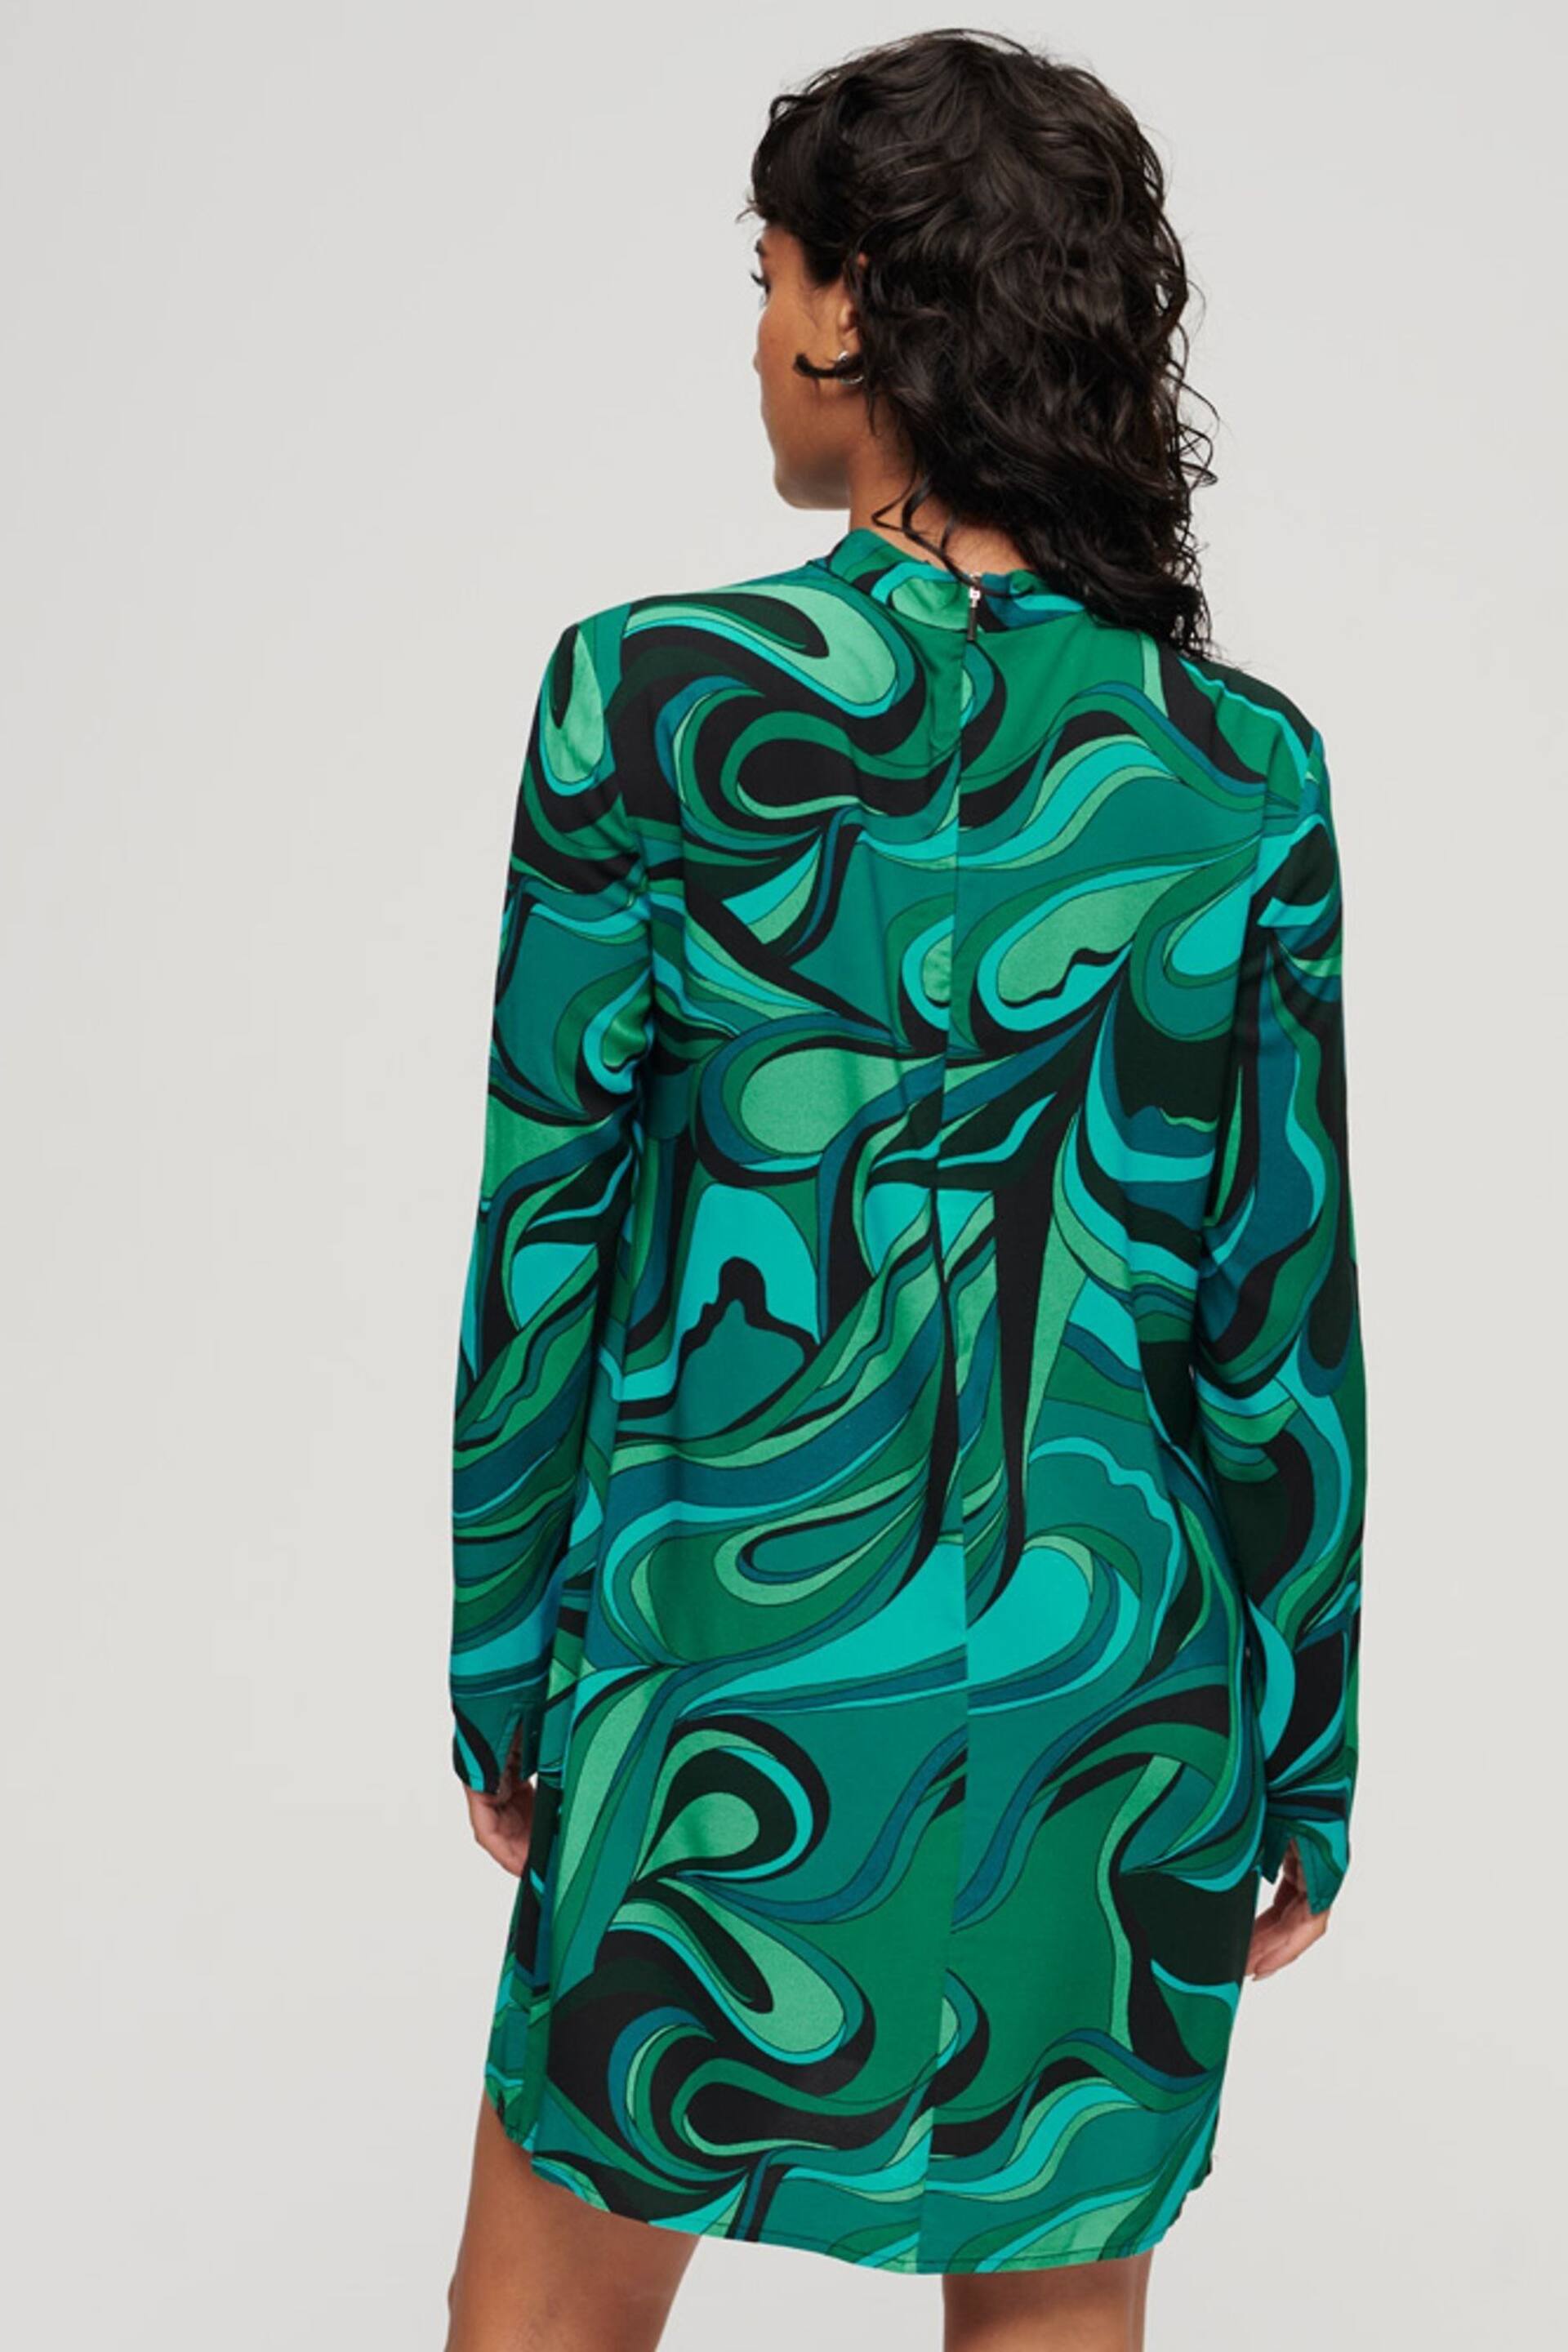 Superdry Green Long Sleeve Printed Mini Dress - Image 2 of 6